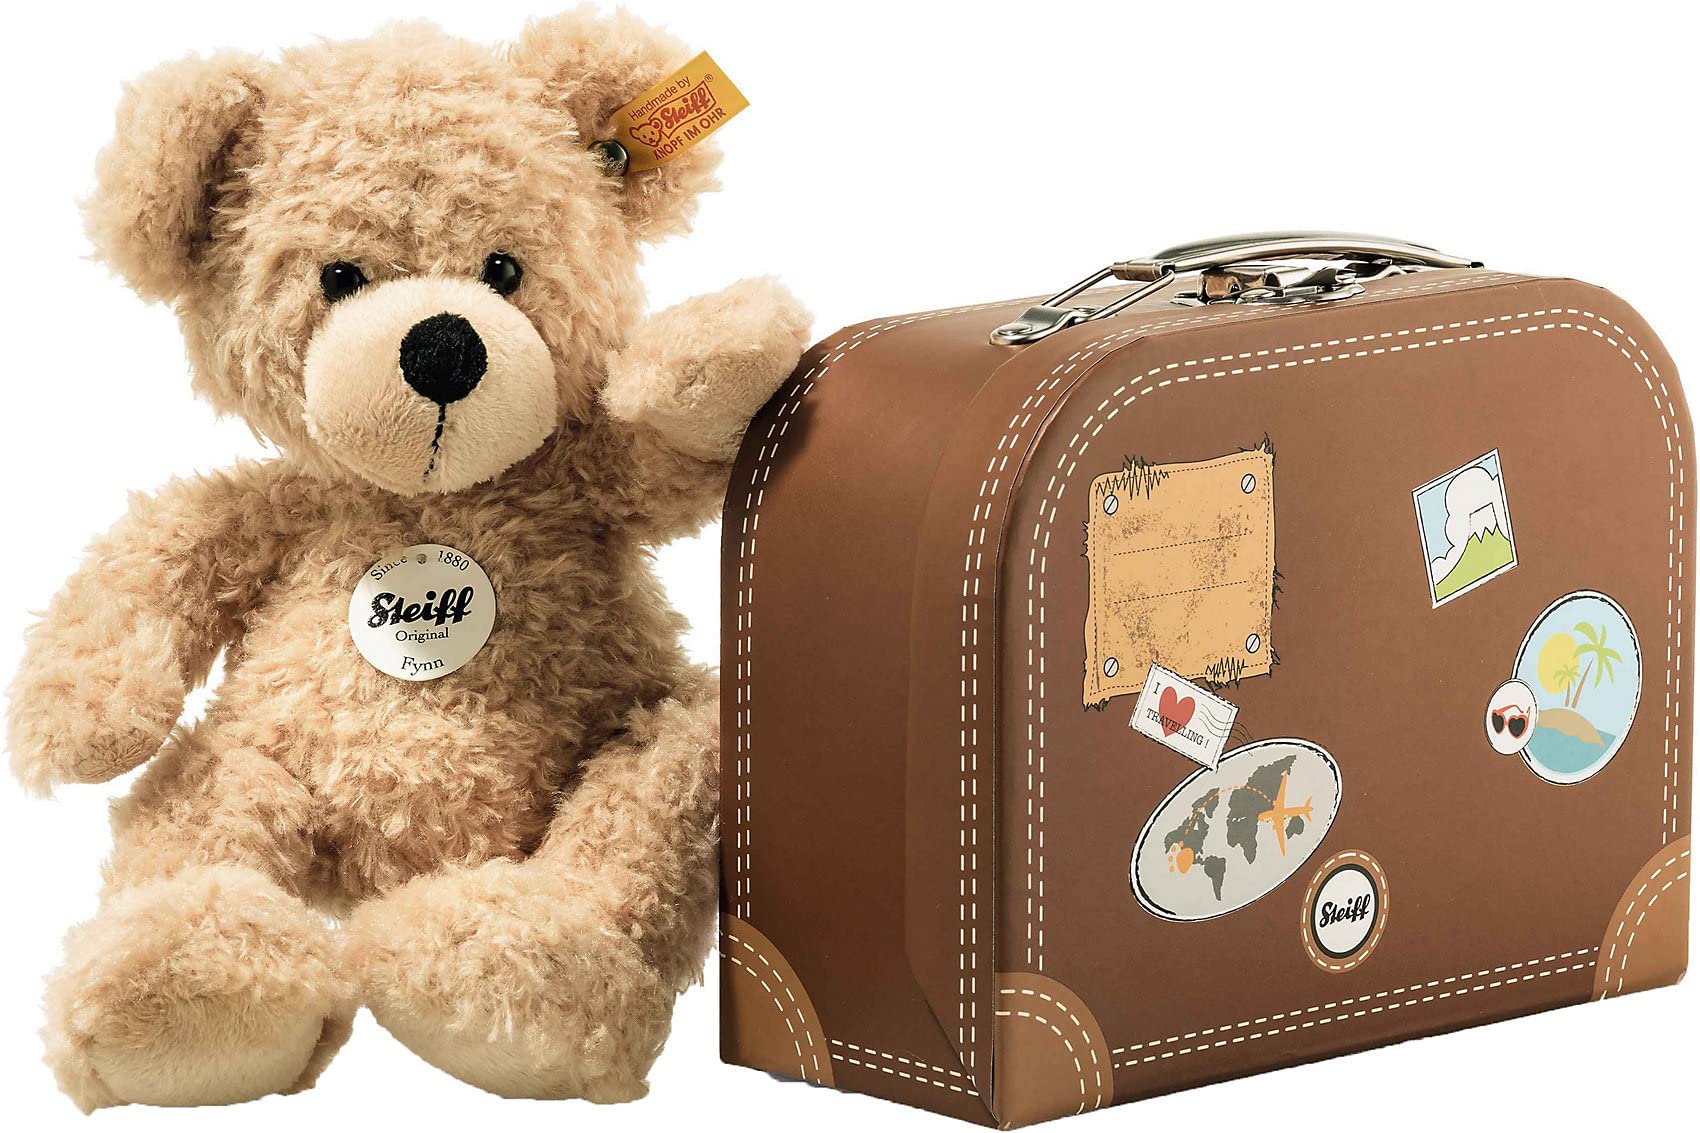 Steiff Fynn Teddybär im Koffer, beige [RAB2]